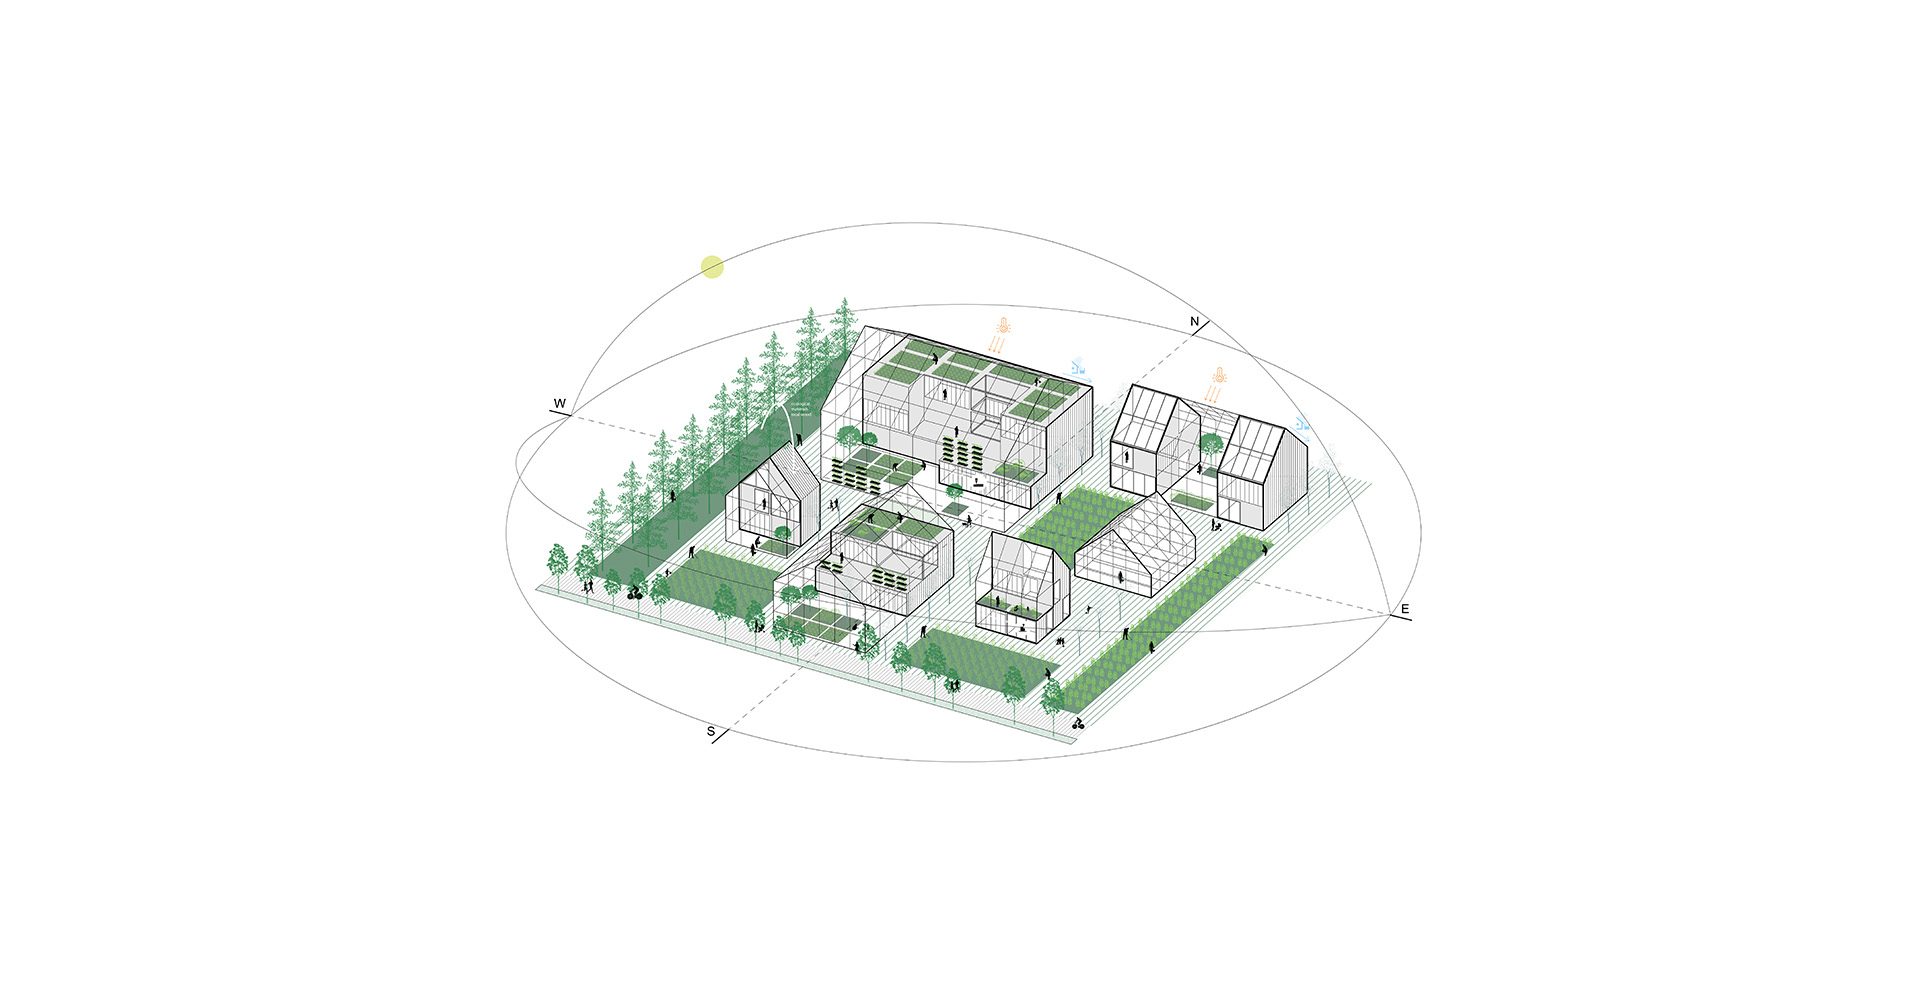 Europan16_Share-Typology-Proposals-_Self-Nurturing-City Diagram 2